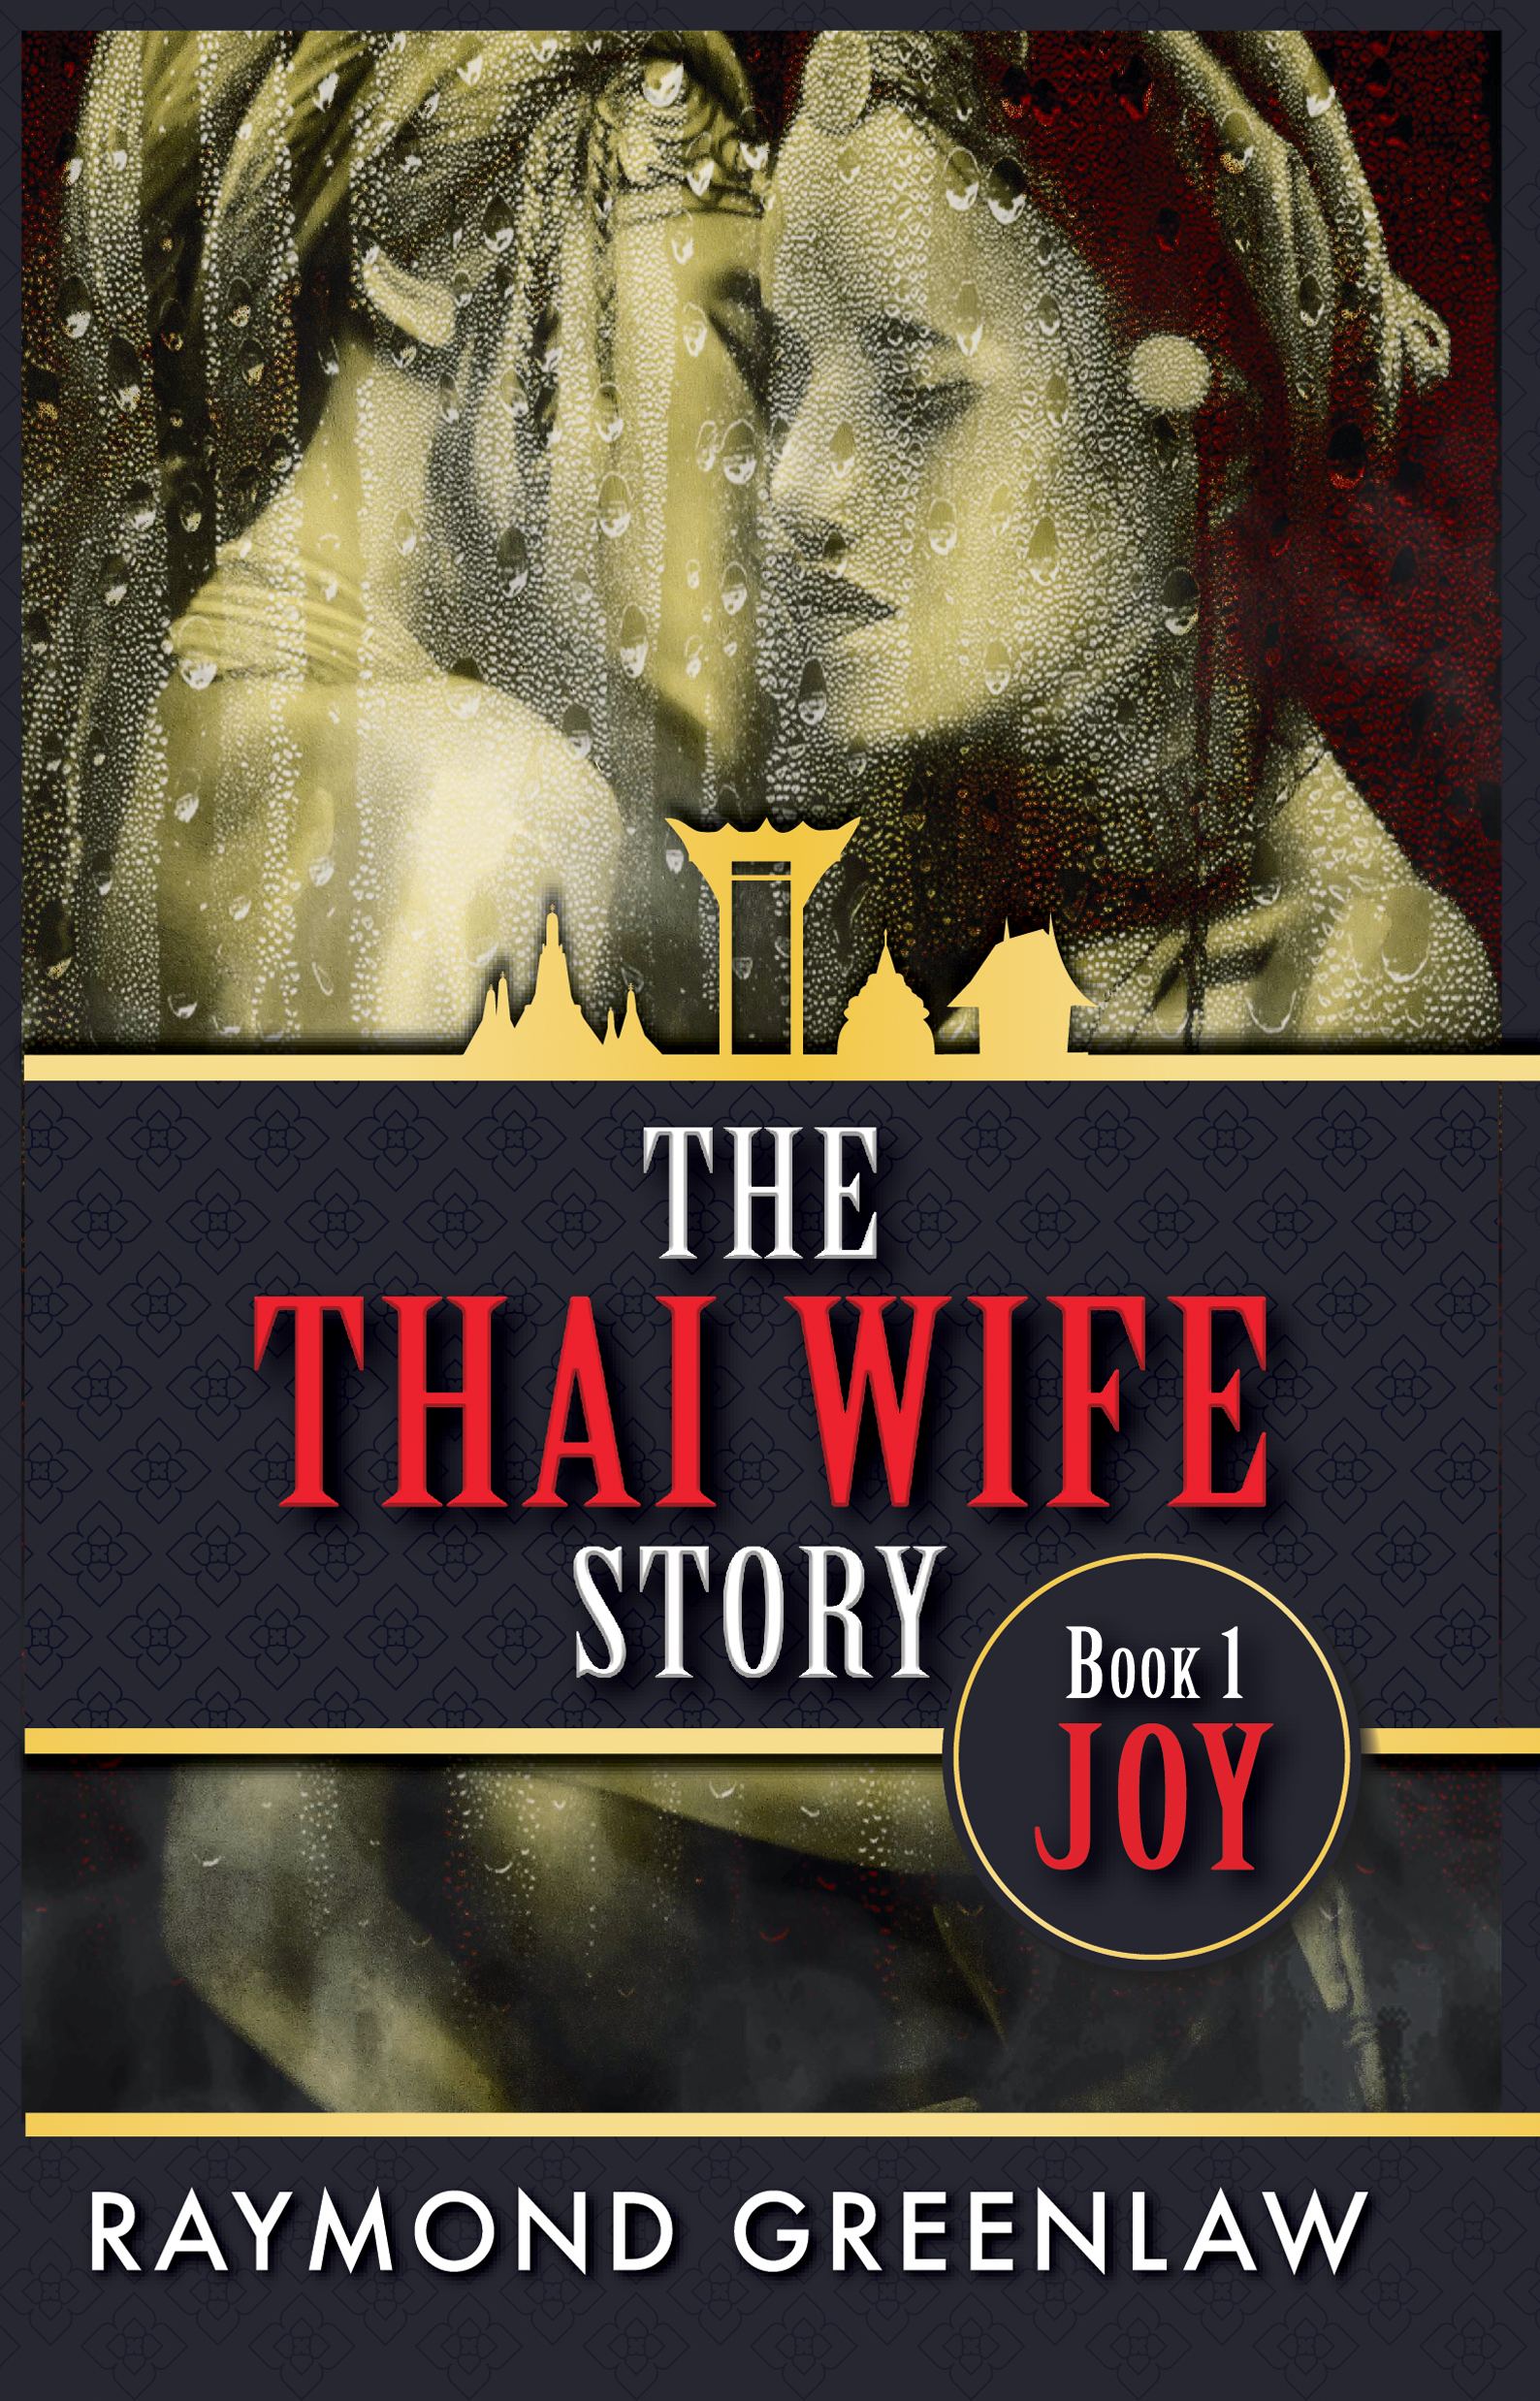 The Thai Wife Story Joy